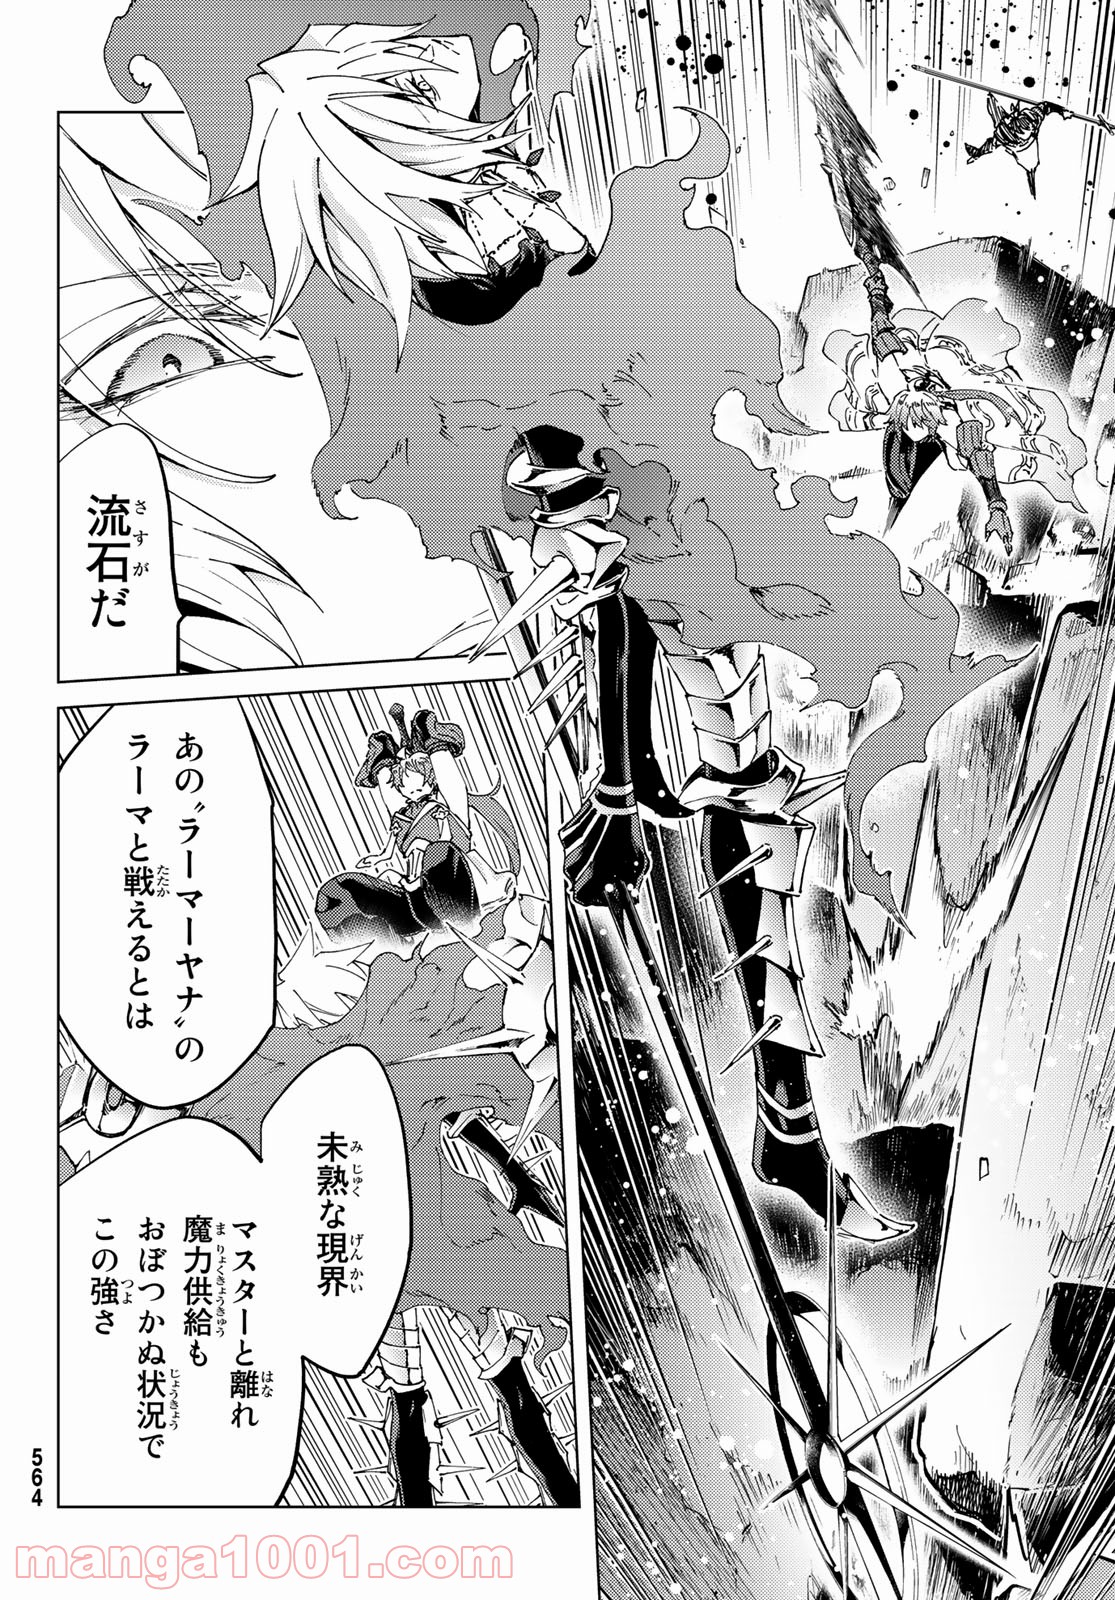 Fate Grand Order Turas Realta Raw 第47話 Manga Raw